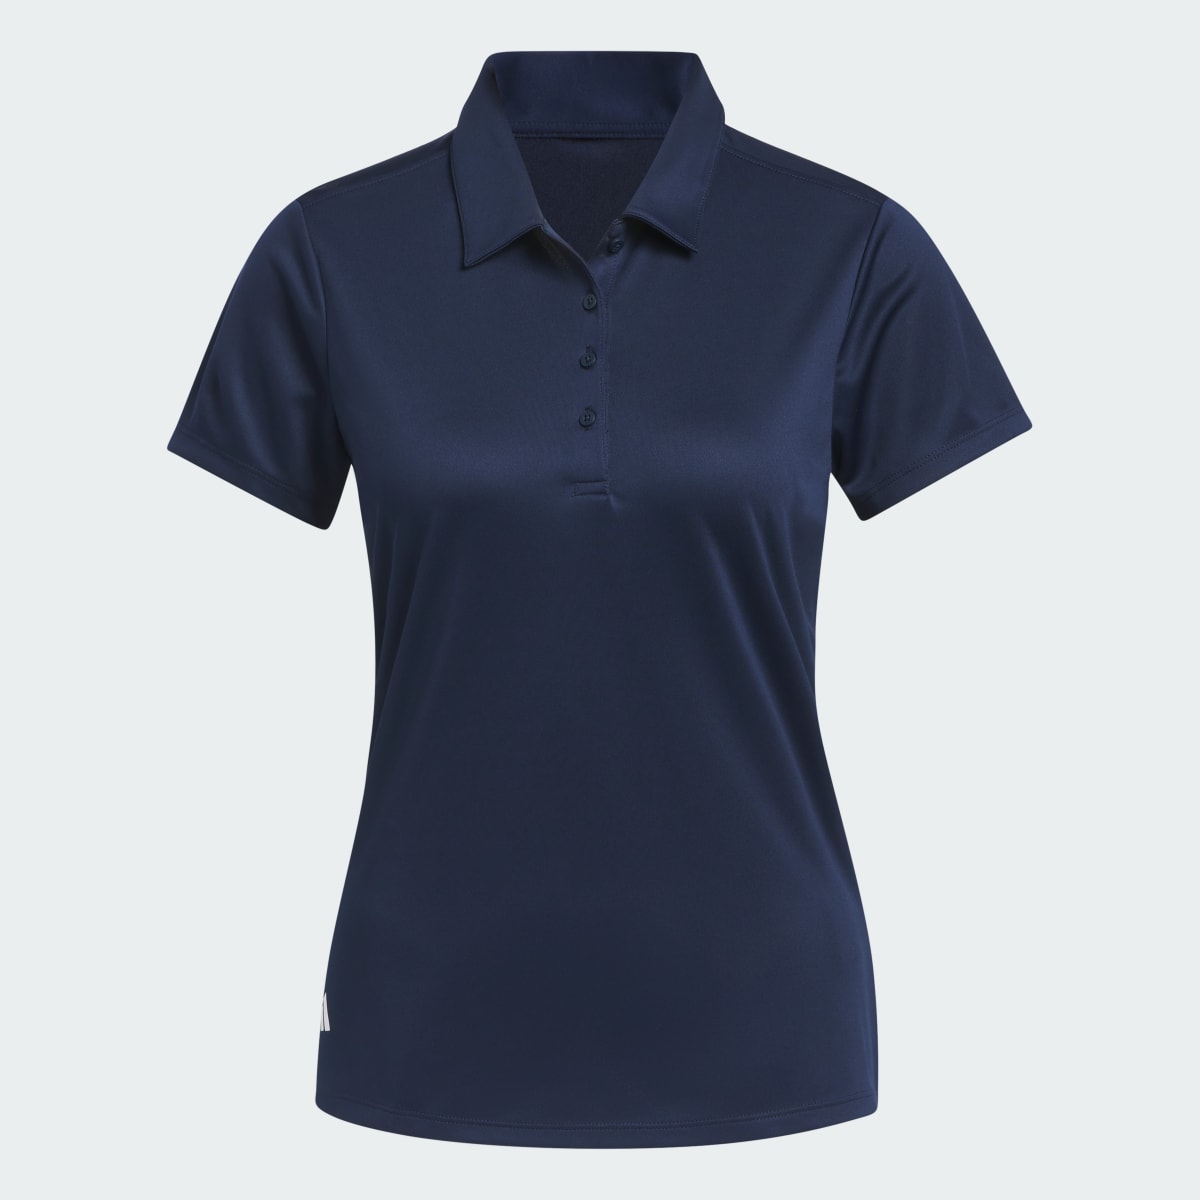 Adidas Koszulka polo Women's Solid Performance Short Sleeve. 5